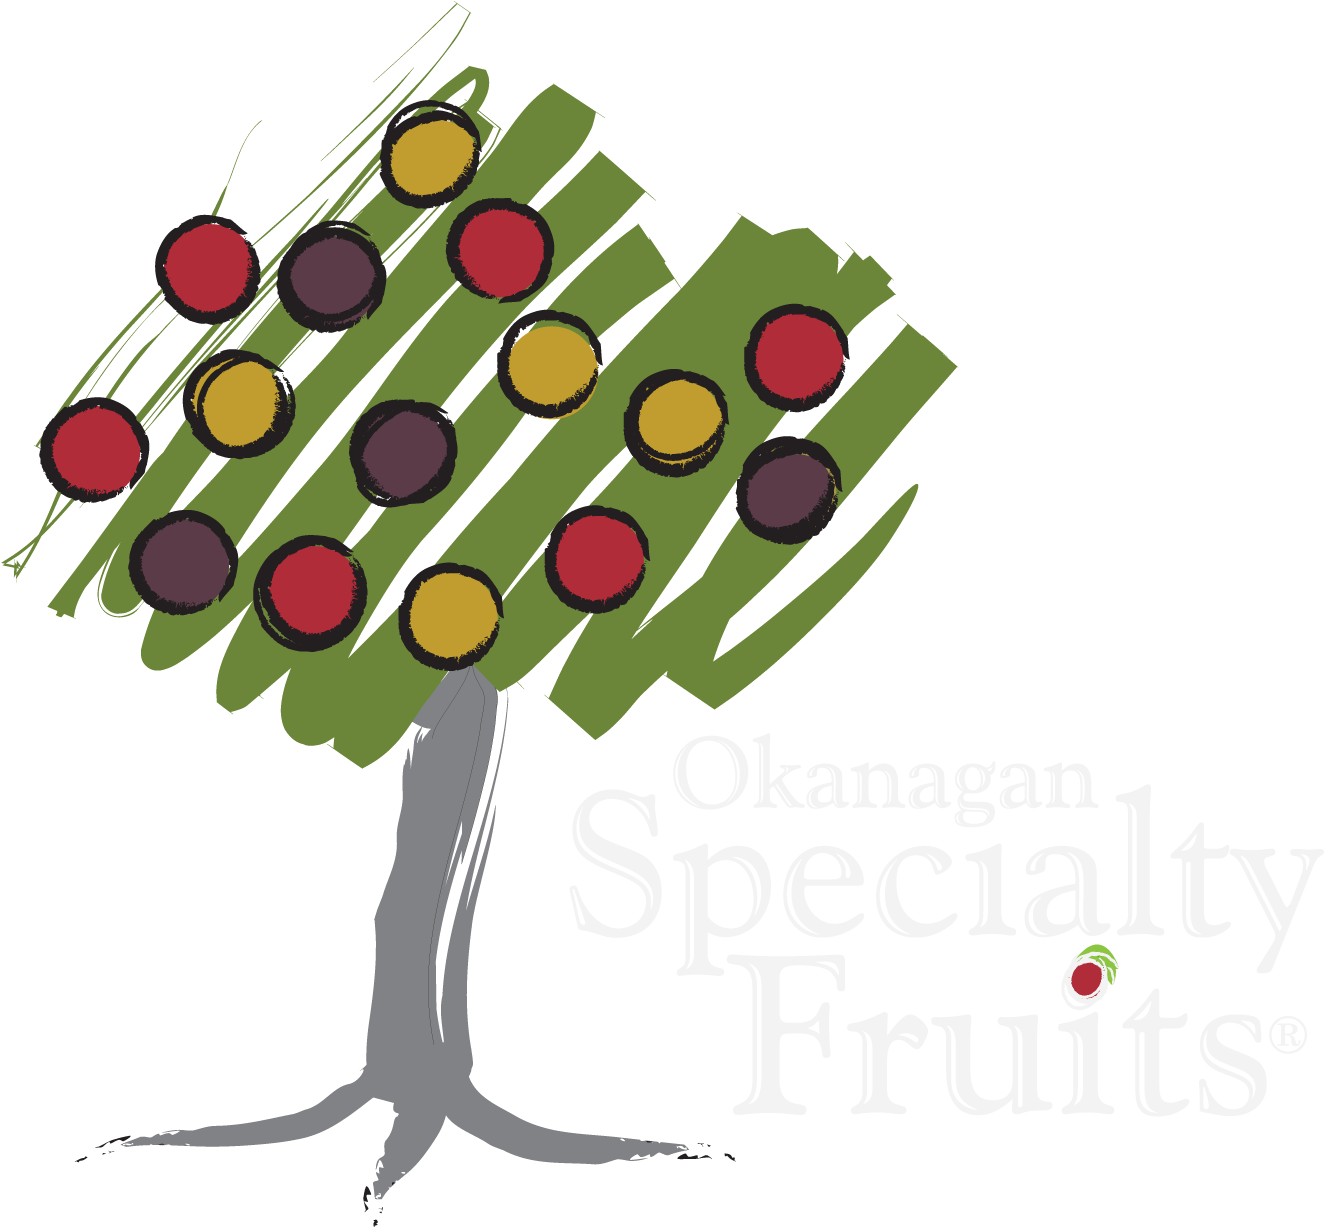 Arctic® Apples Okanagan Specialty Fruits Inc - Okanagan Specialty Fruits (1685x1550)